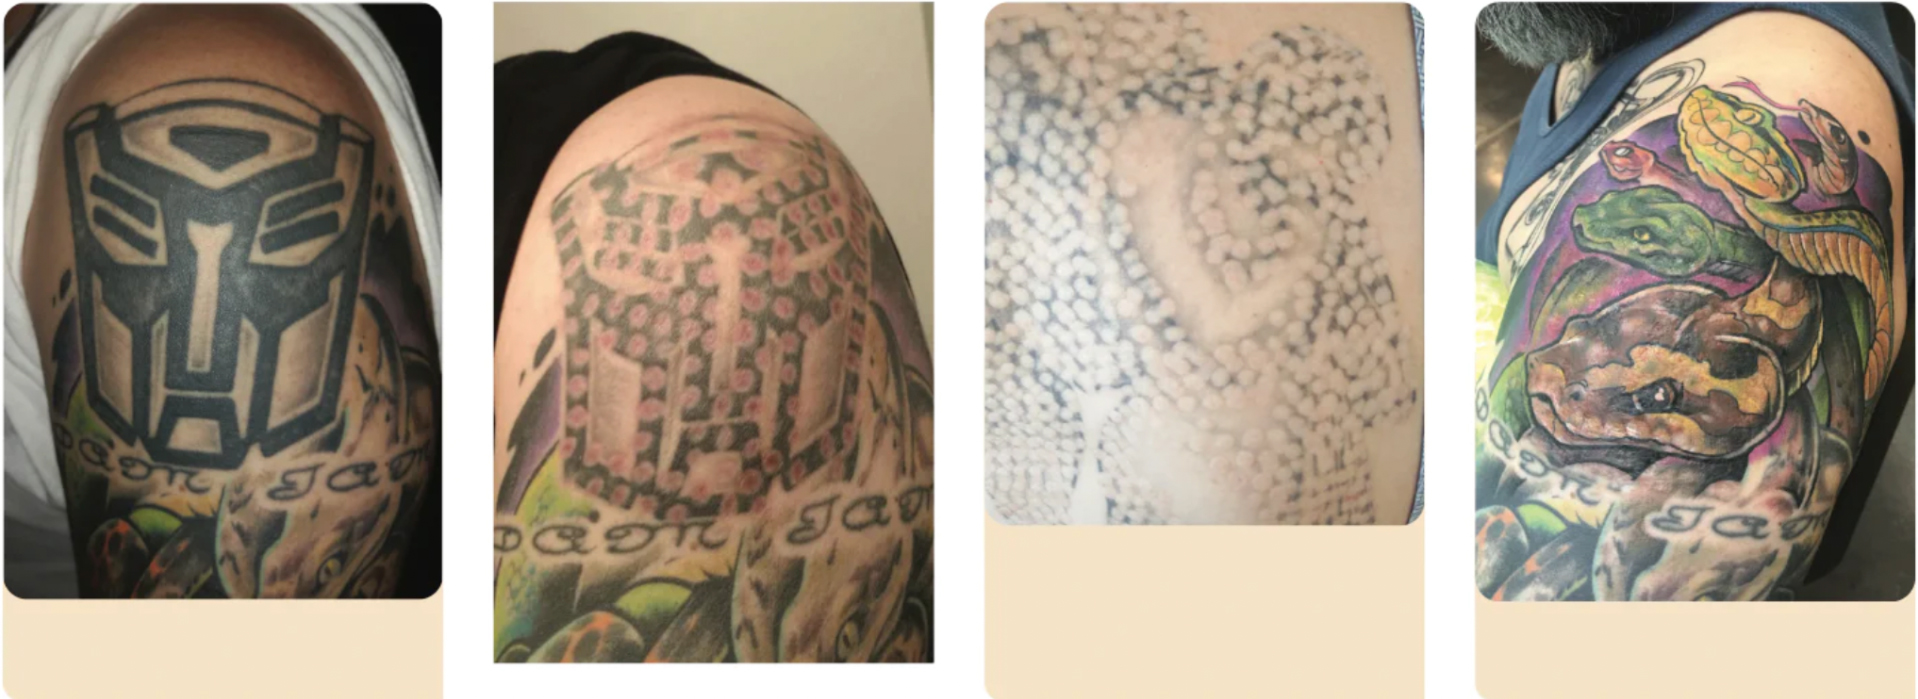 Tattoo Cover Up Calf Sleeve - White